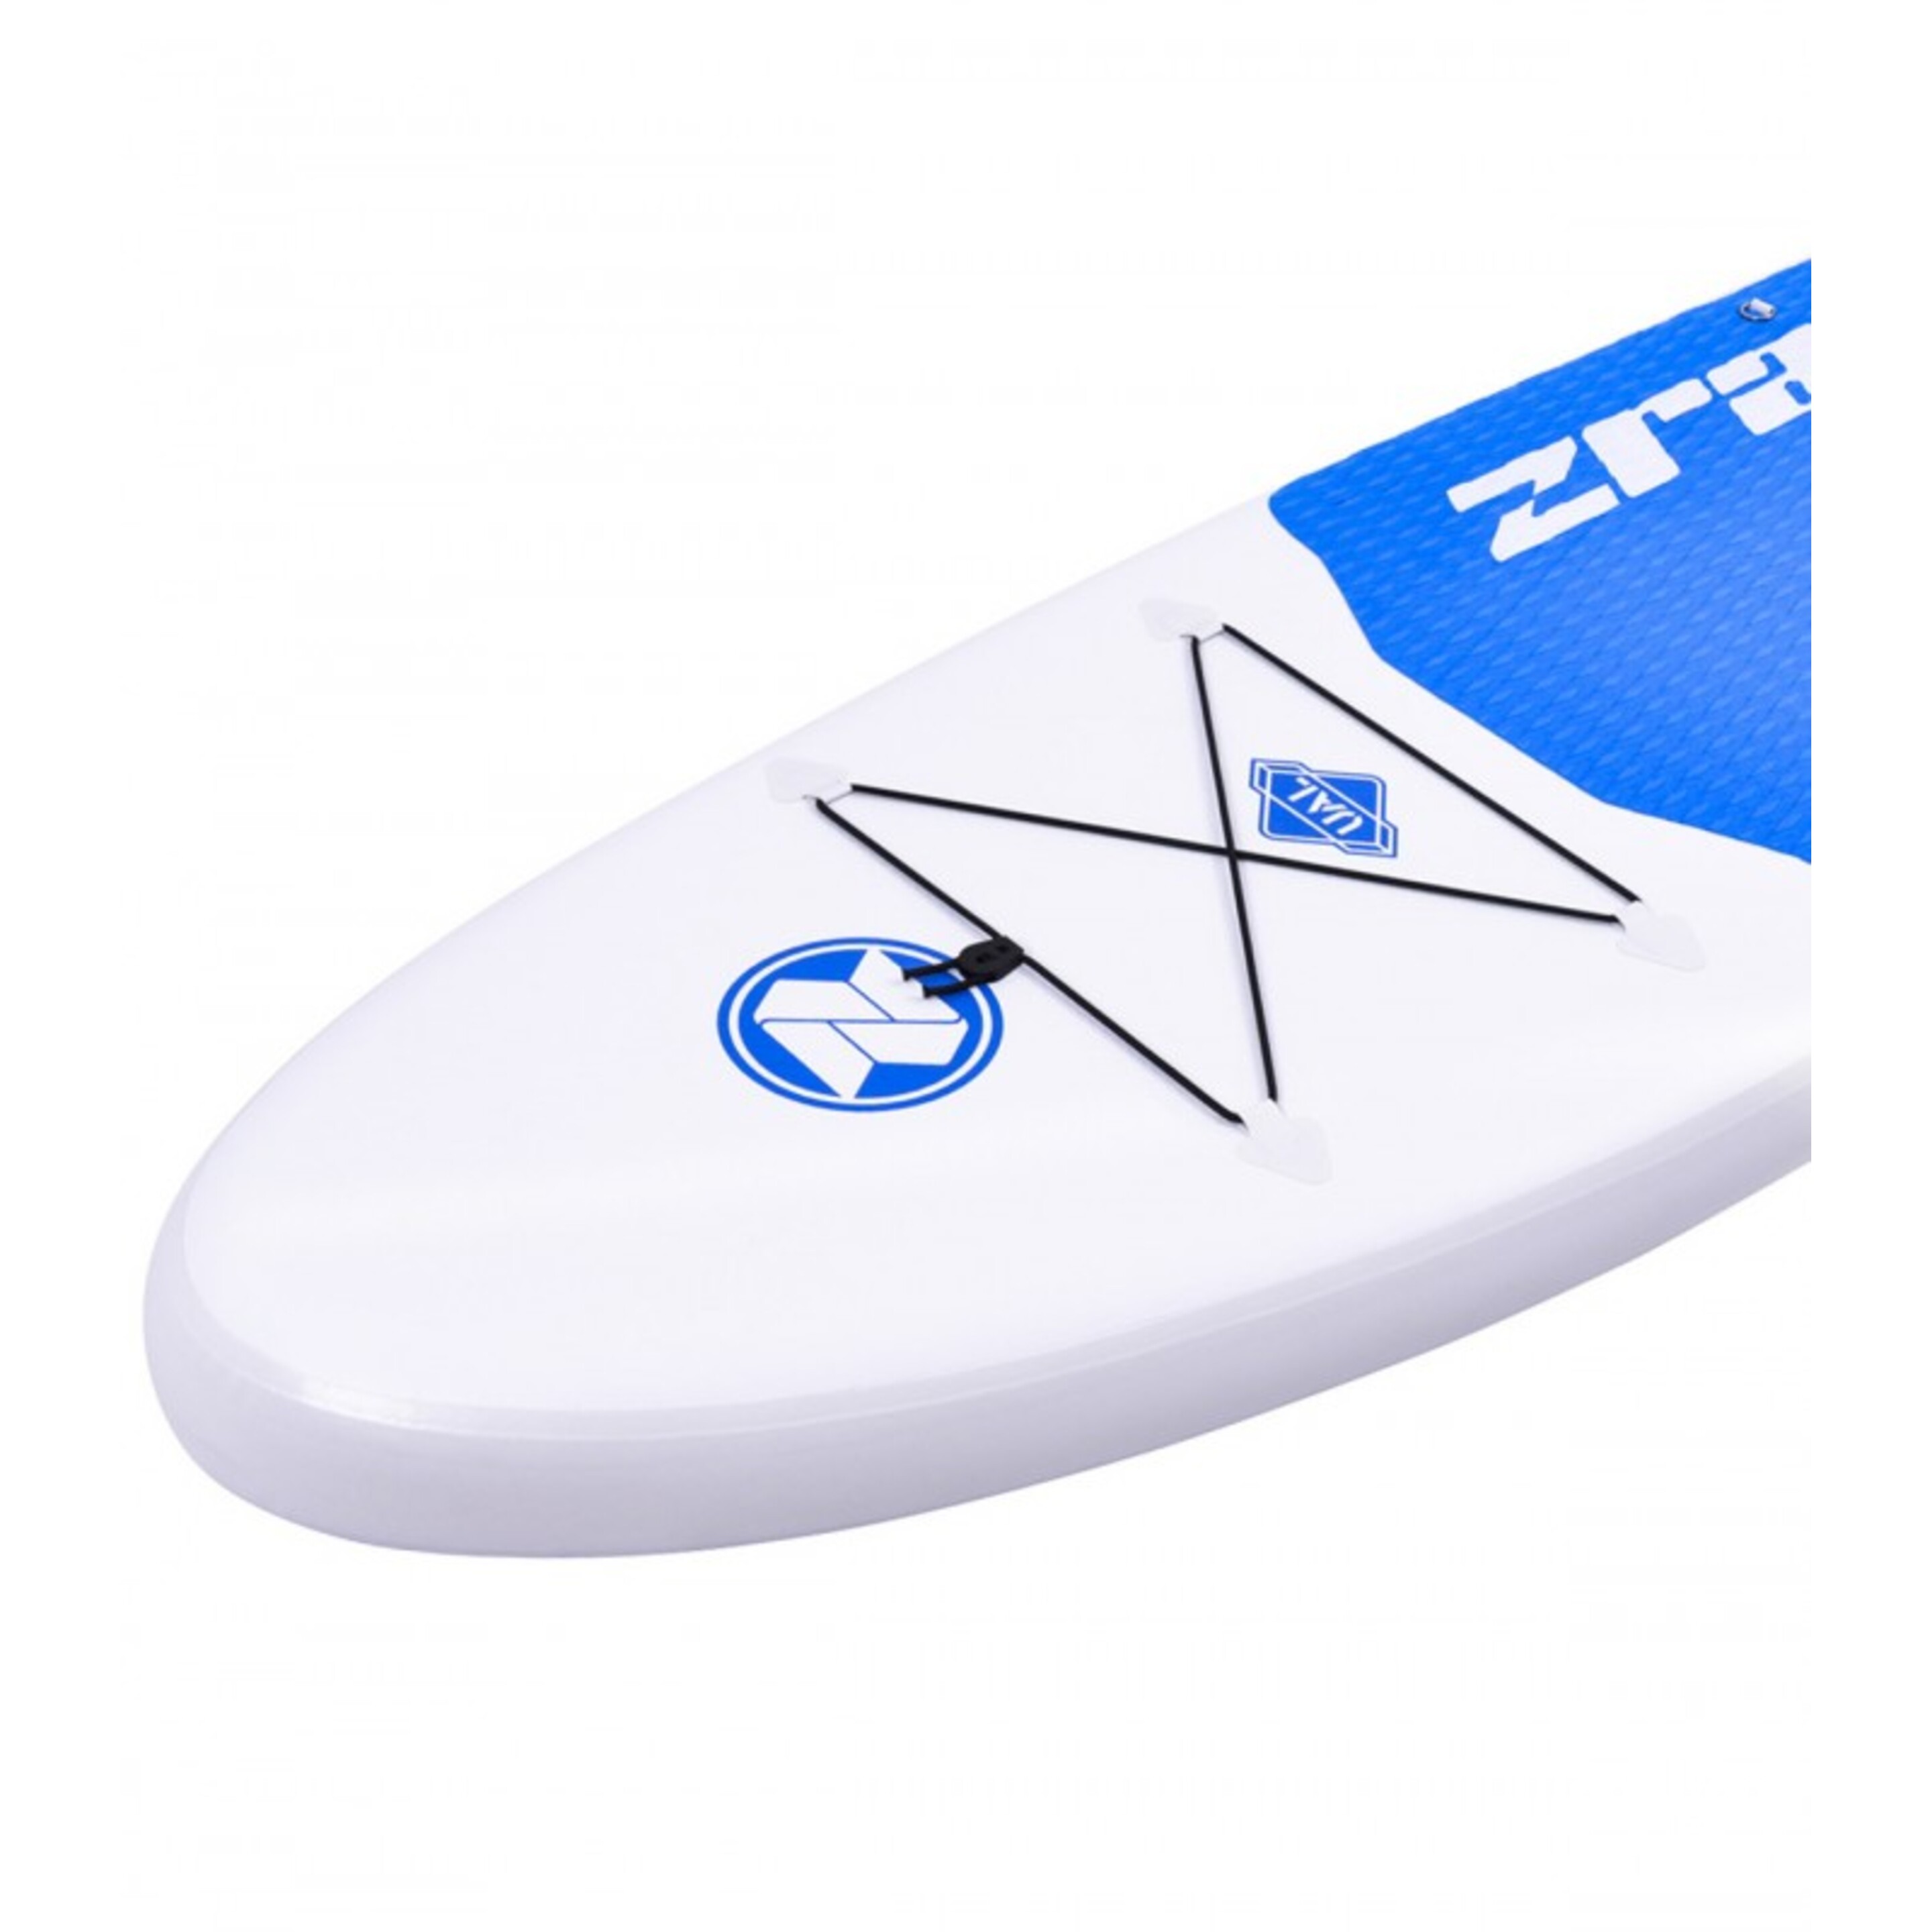 Tabla Paddle Surf Hinchable Zray X-rider X3 12,0 - Azul/Blanco  MKP